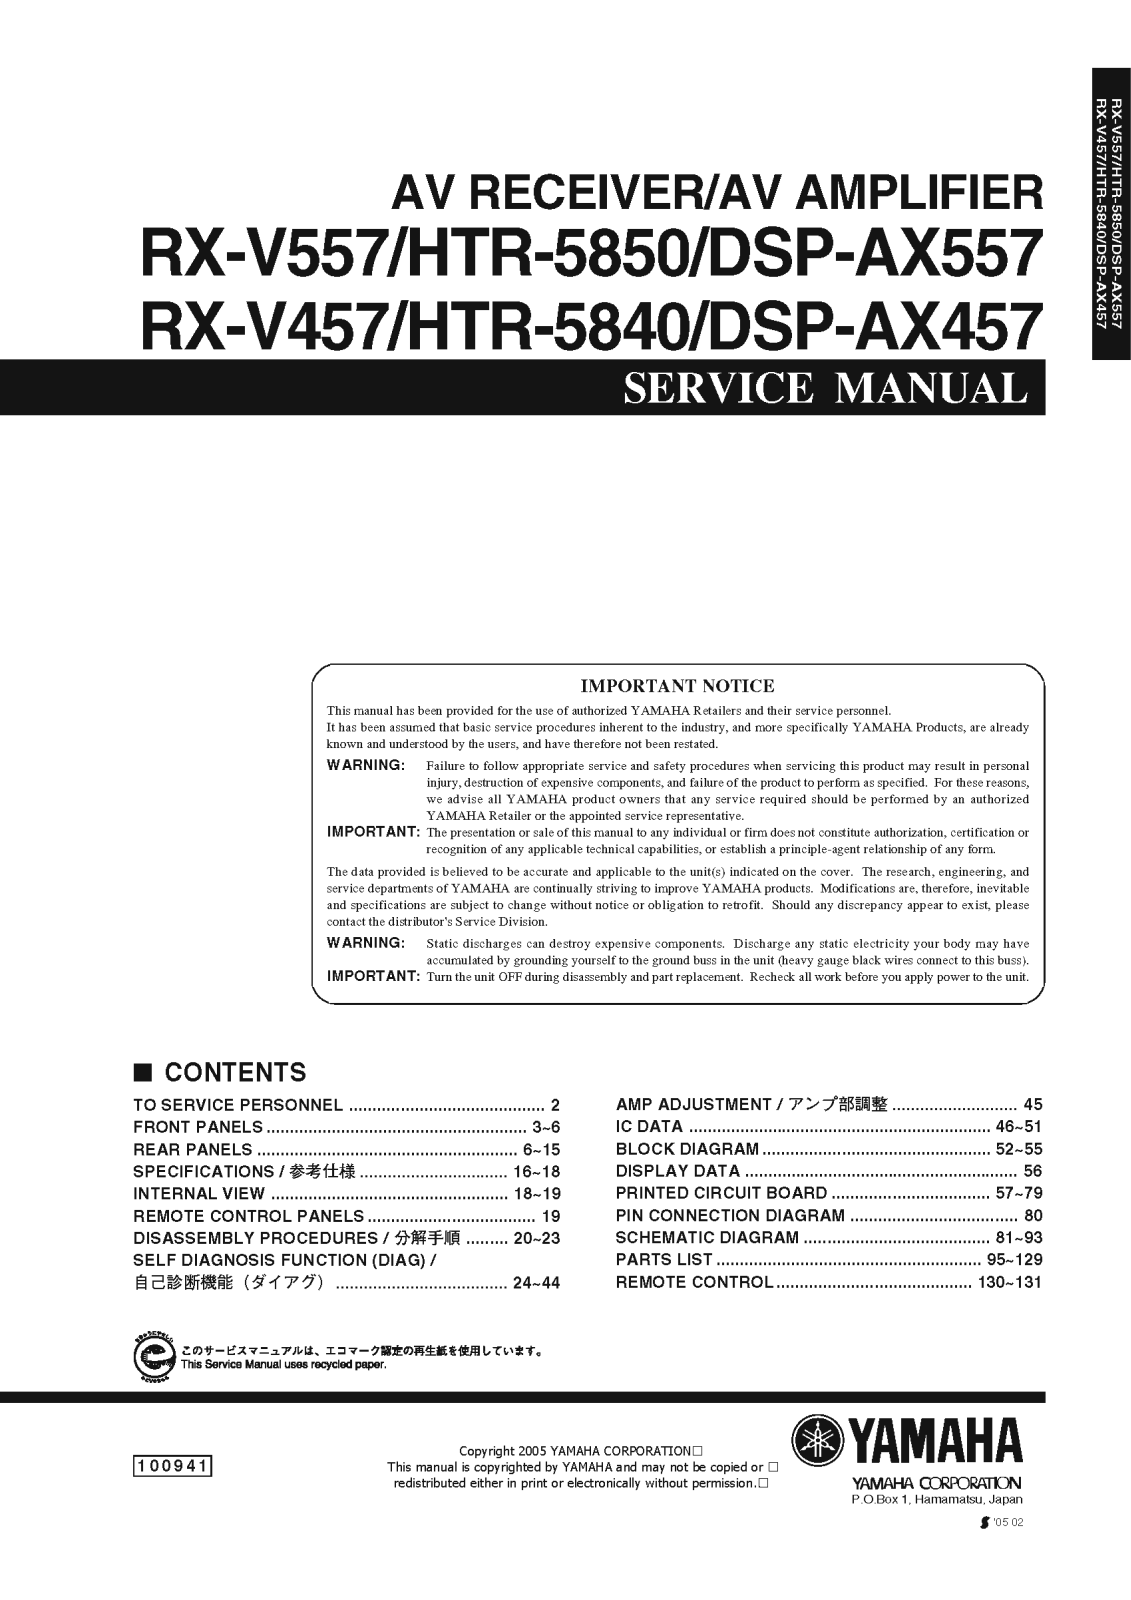 Yamaha HTR-5840 Service Manual